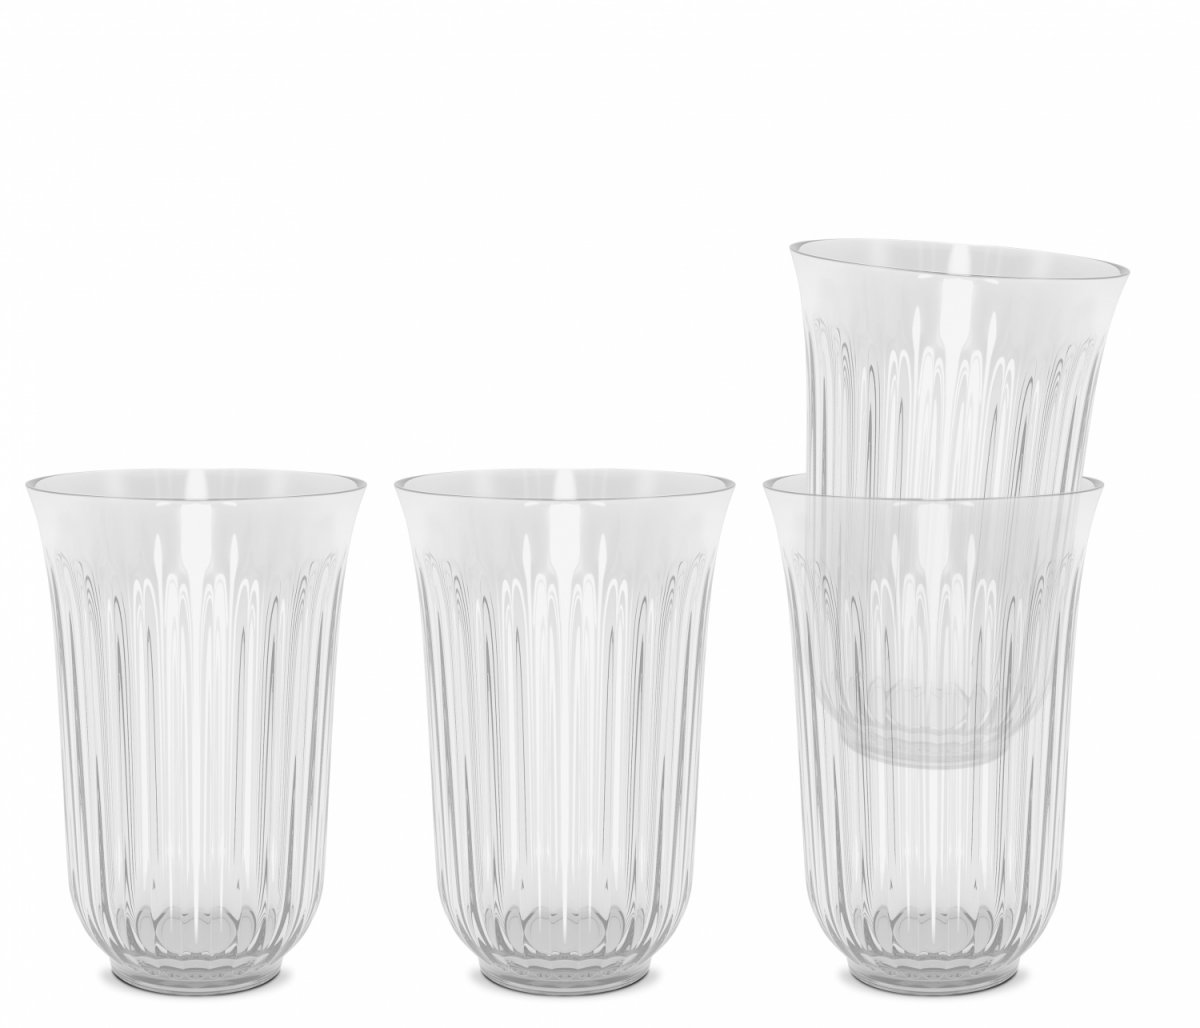 Vandglas 42 cl - Klart Glas - 4-pak - elegante caféglas